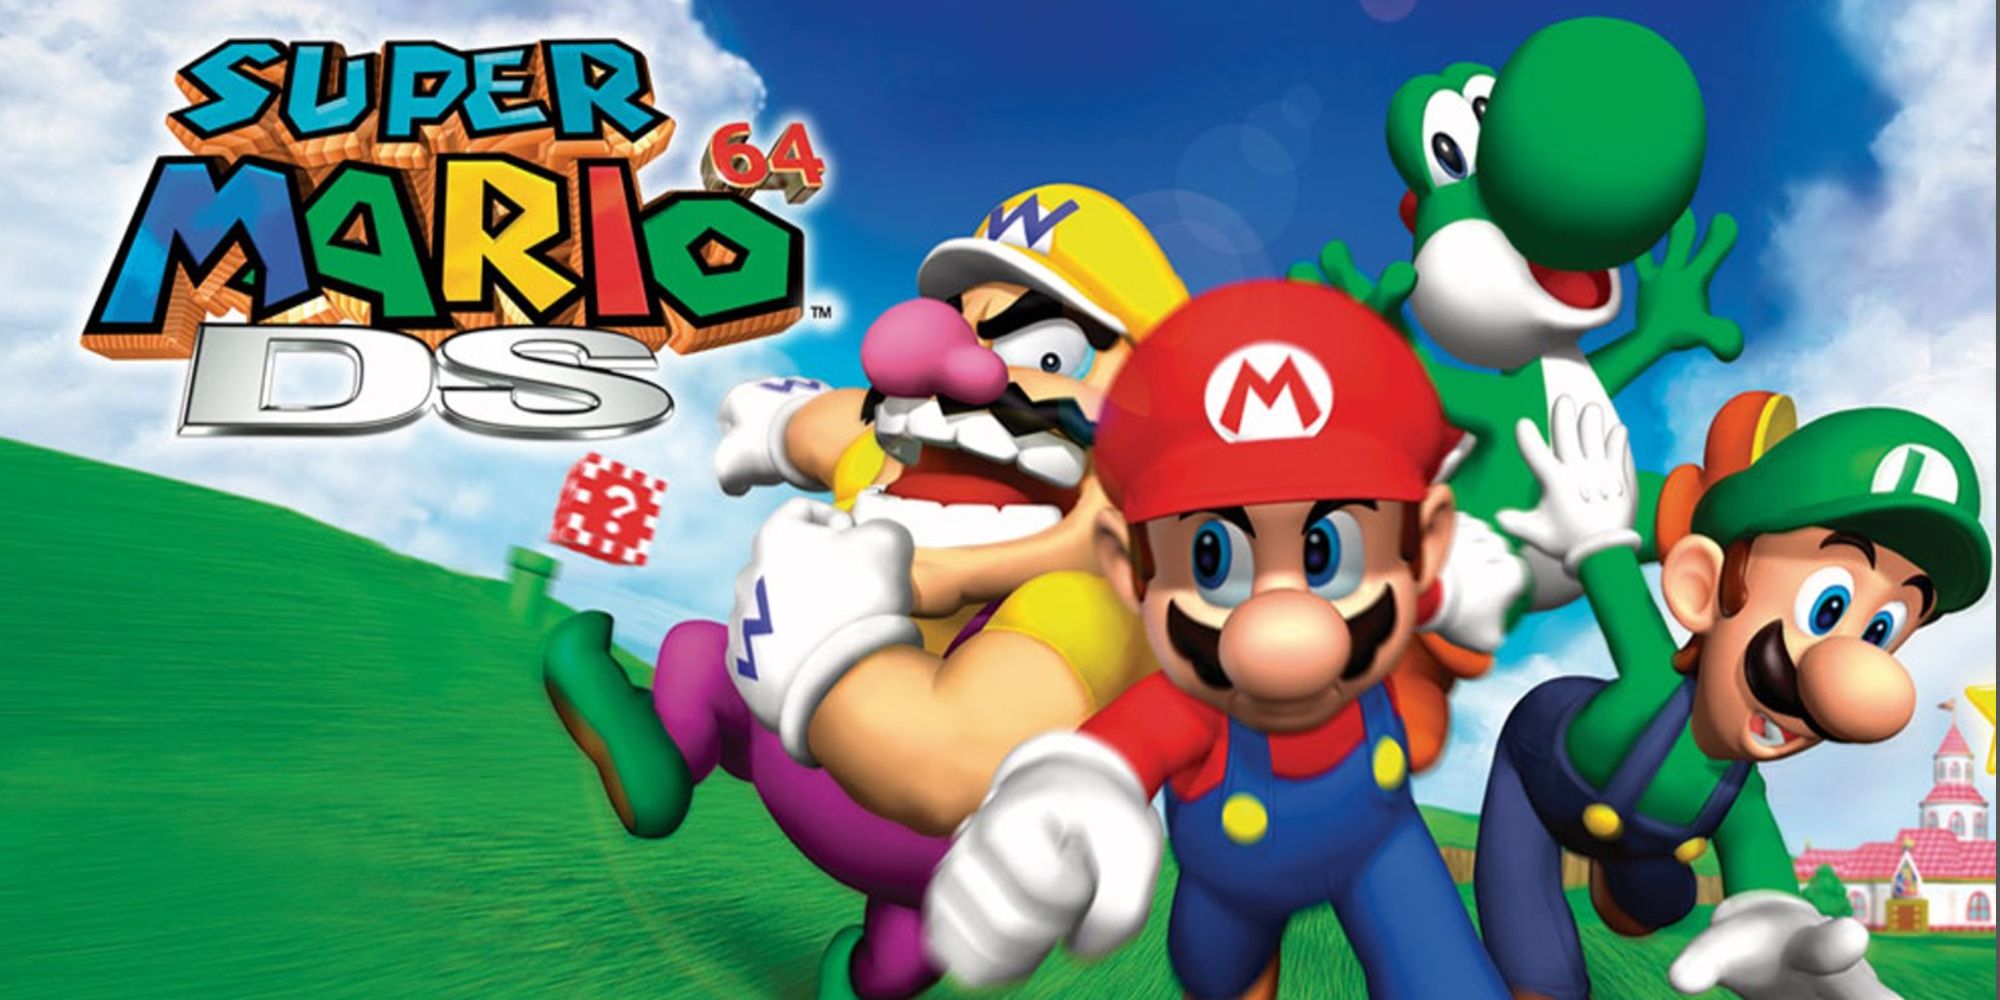 Super Mario 64 DS (2004) Wario is in the cover with Mario Luigi and Yoshi